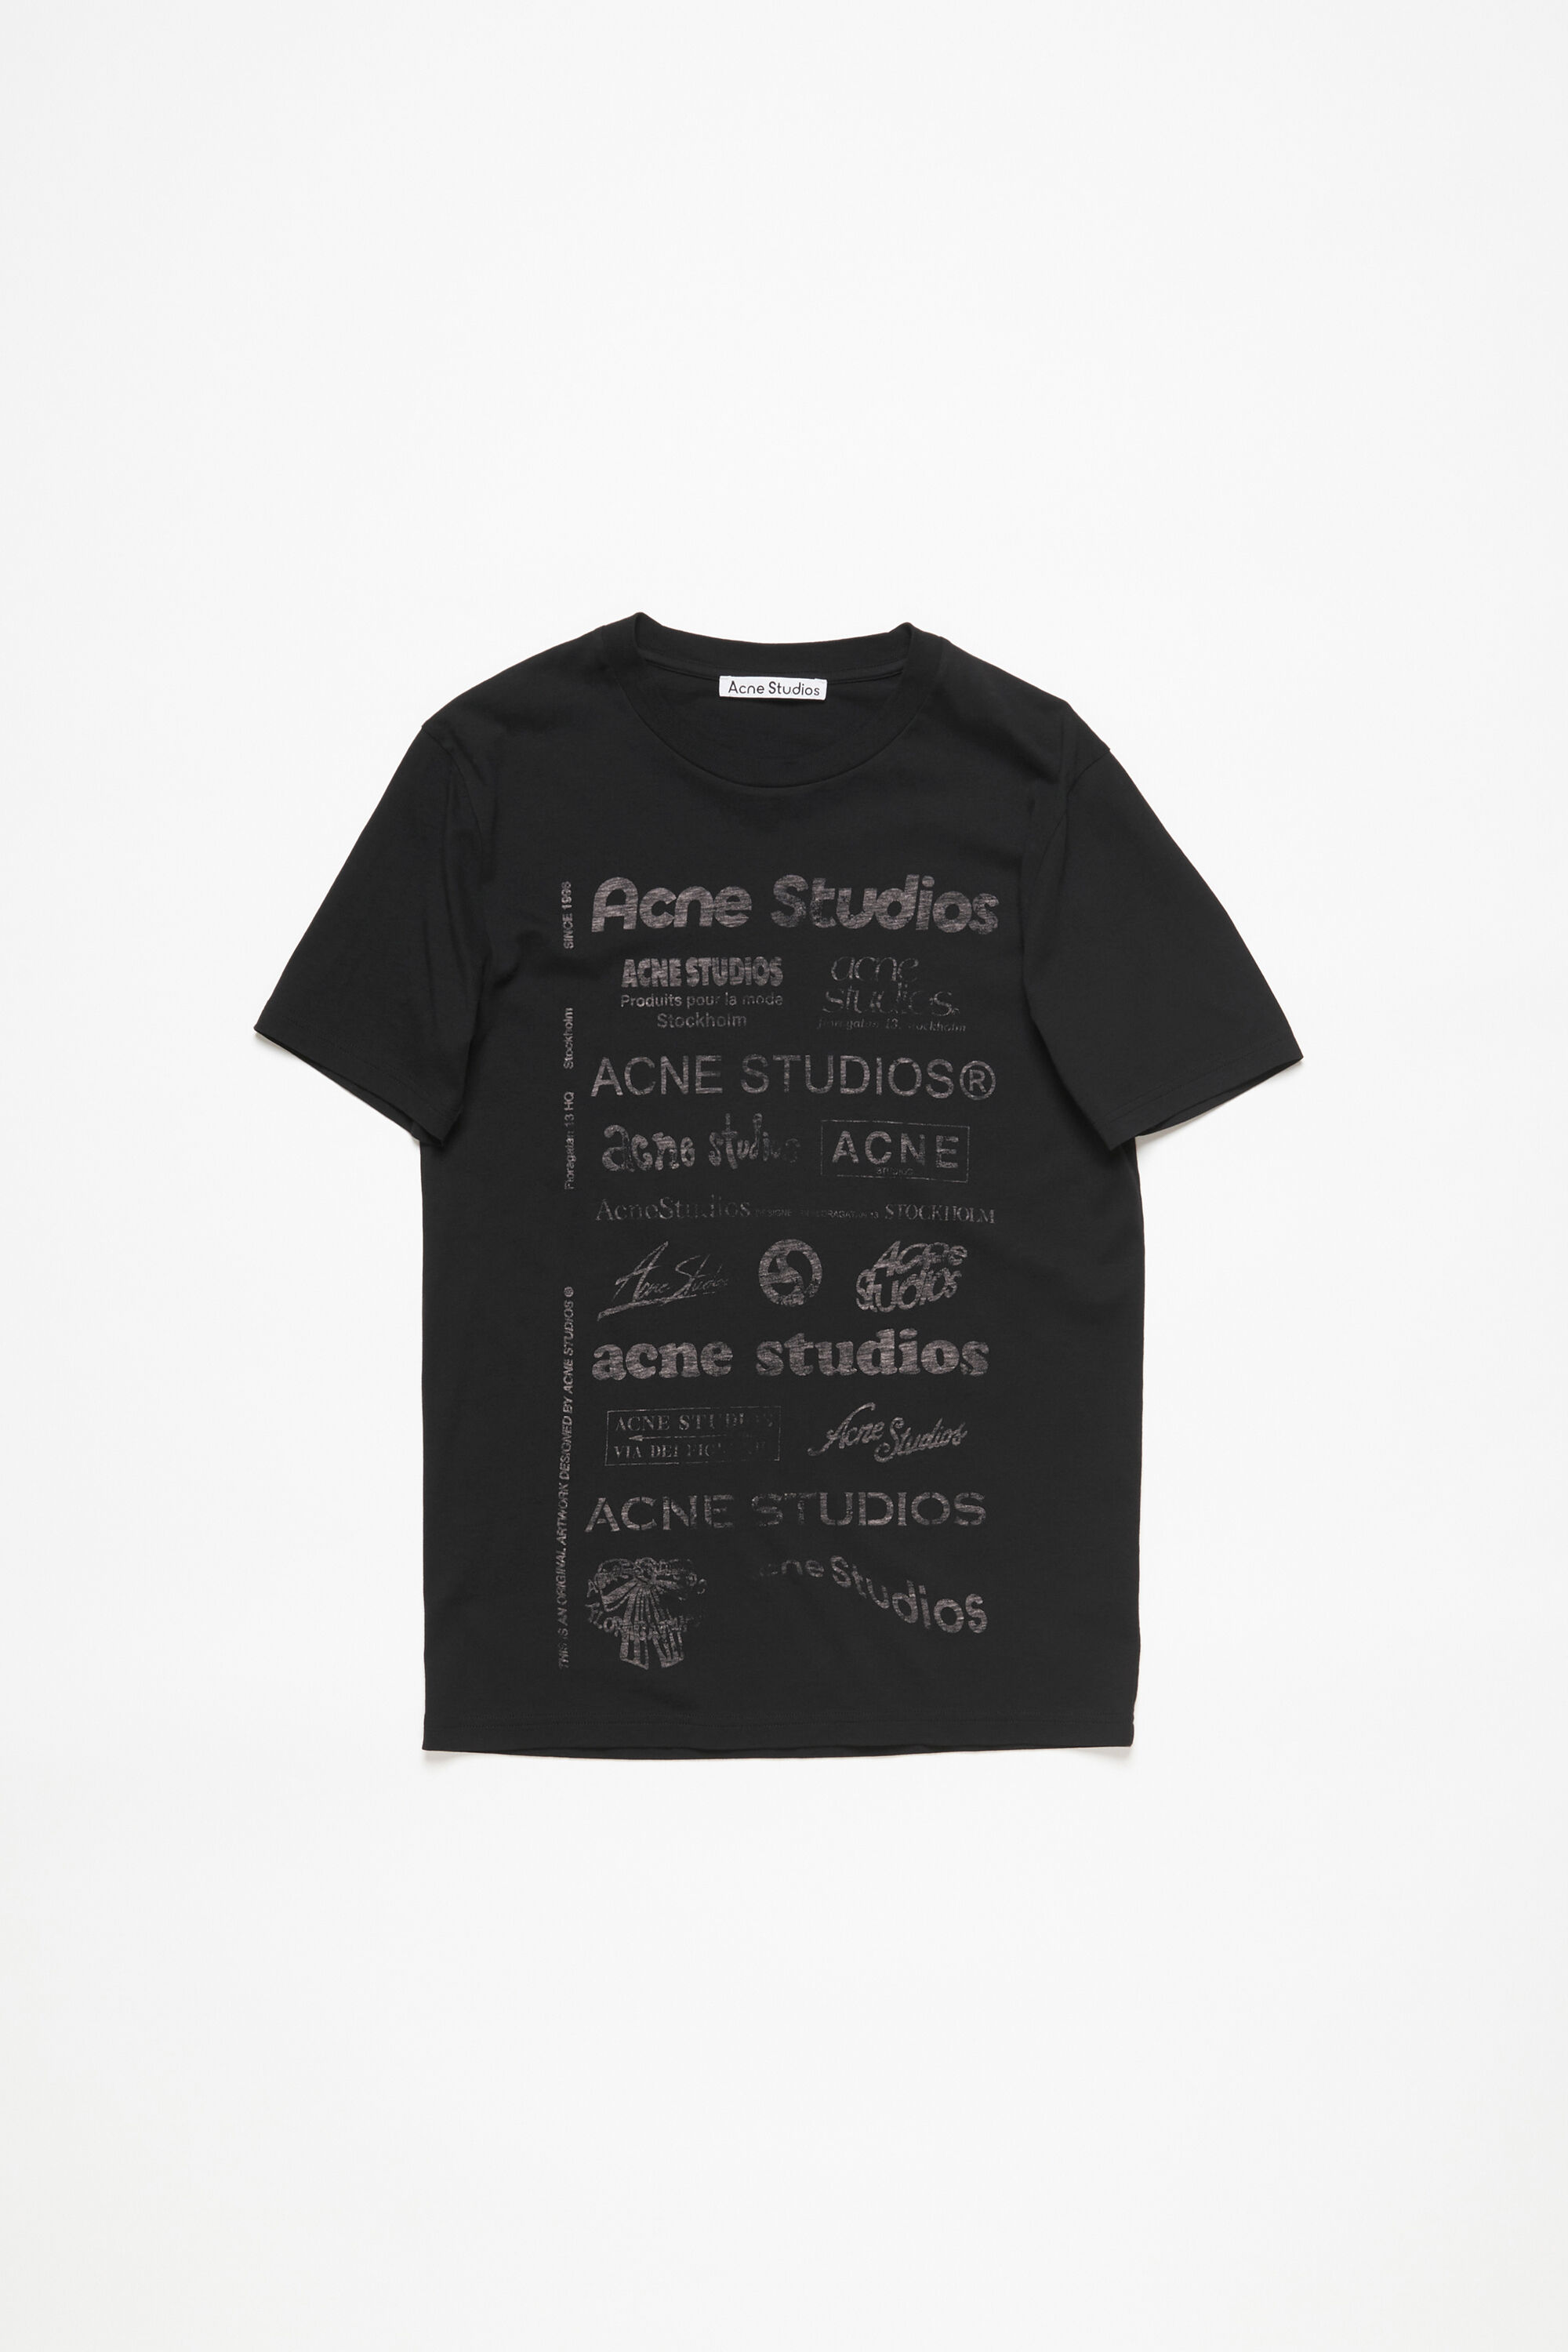 acne studious ロゴ S Tシャツ ブラック-